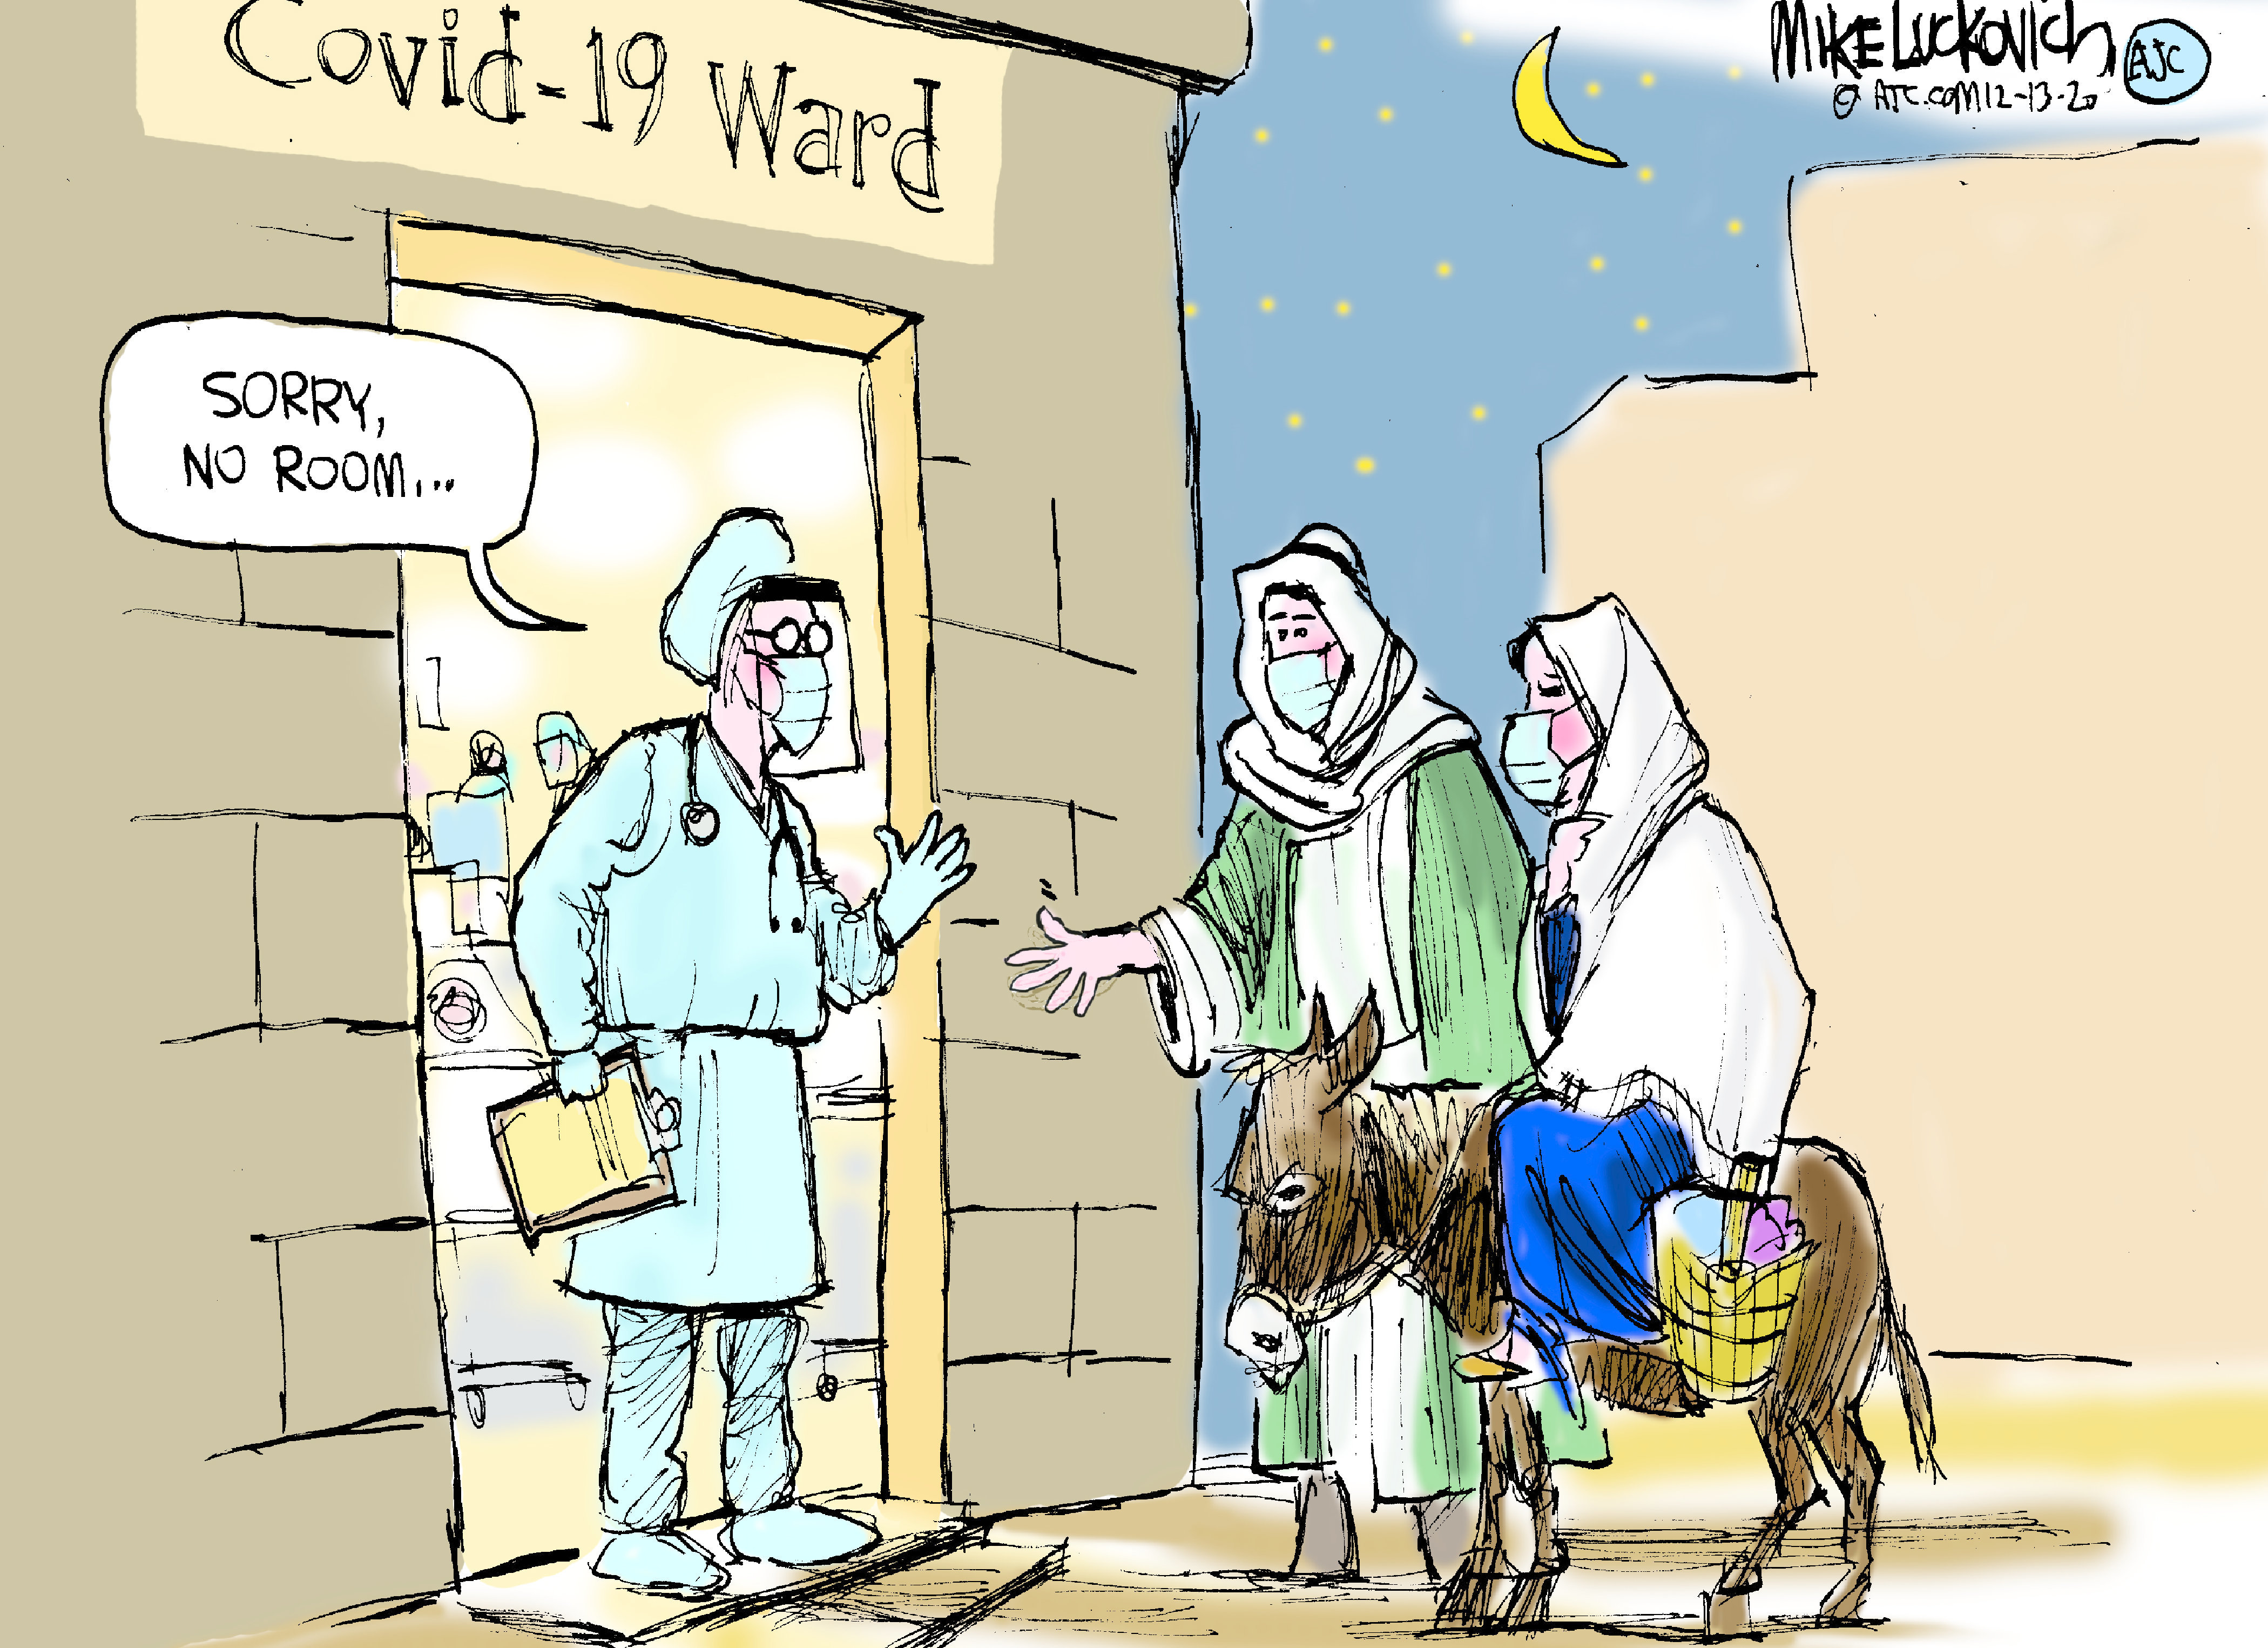 Editorial Cartoon U.S. COVID Christmas